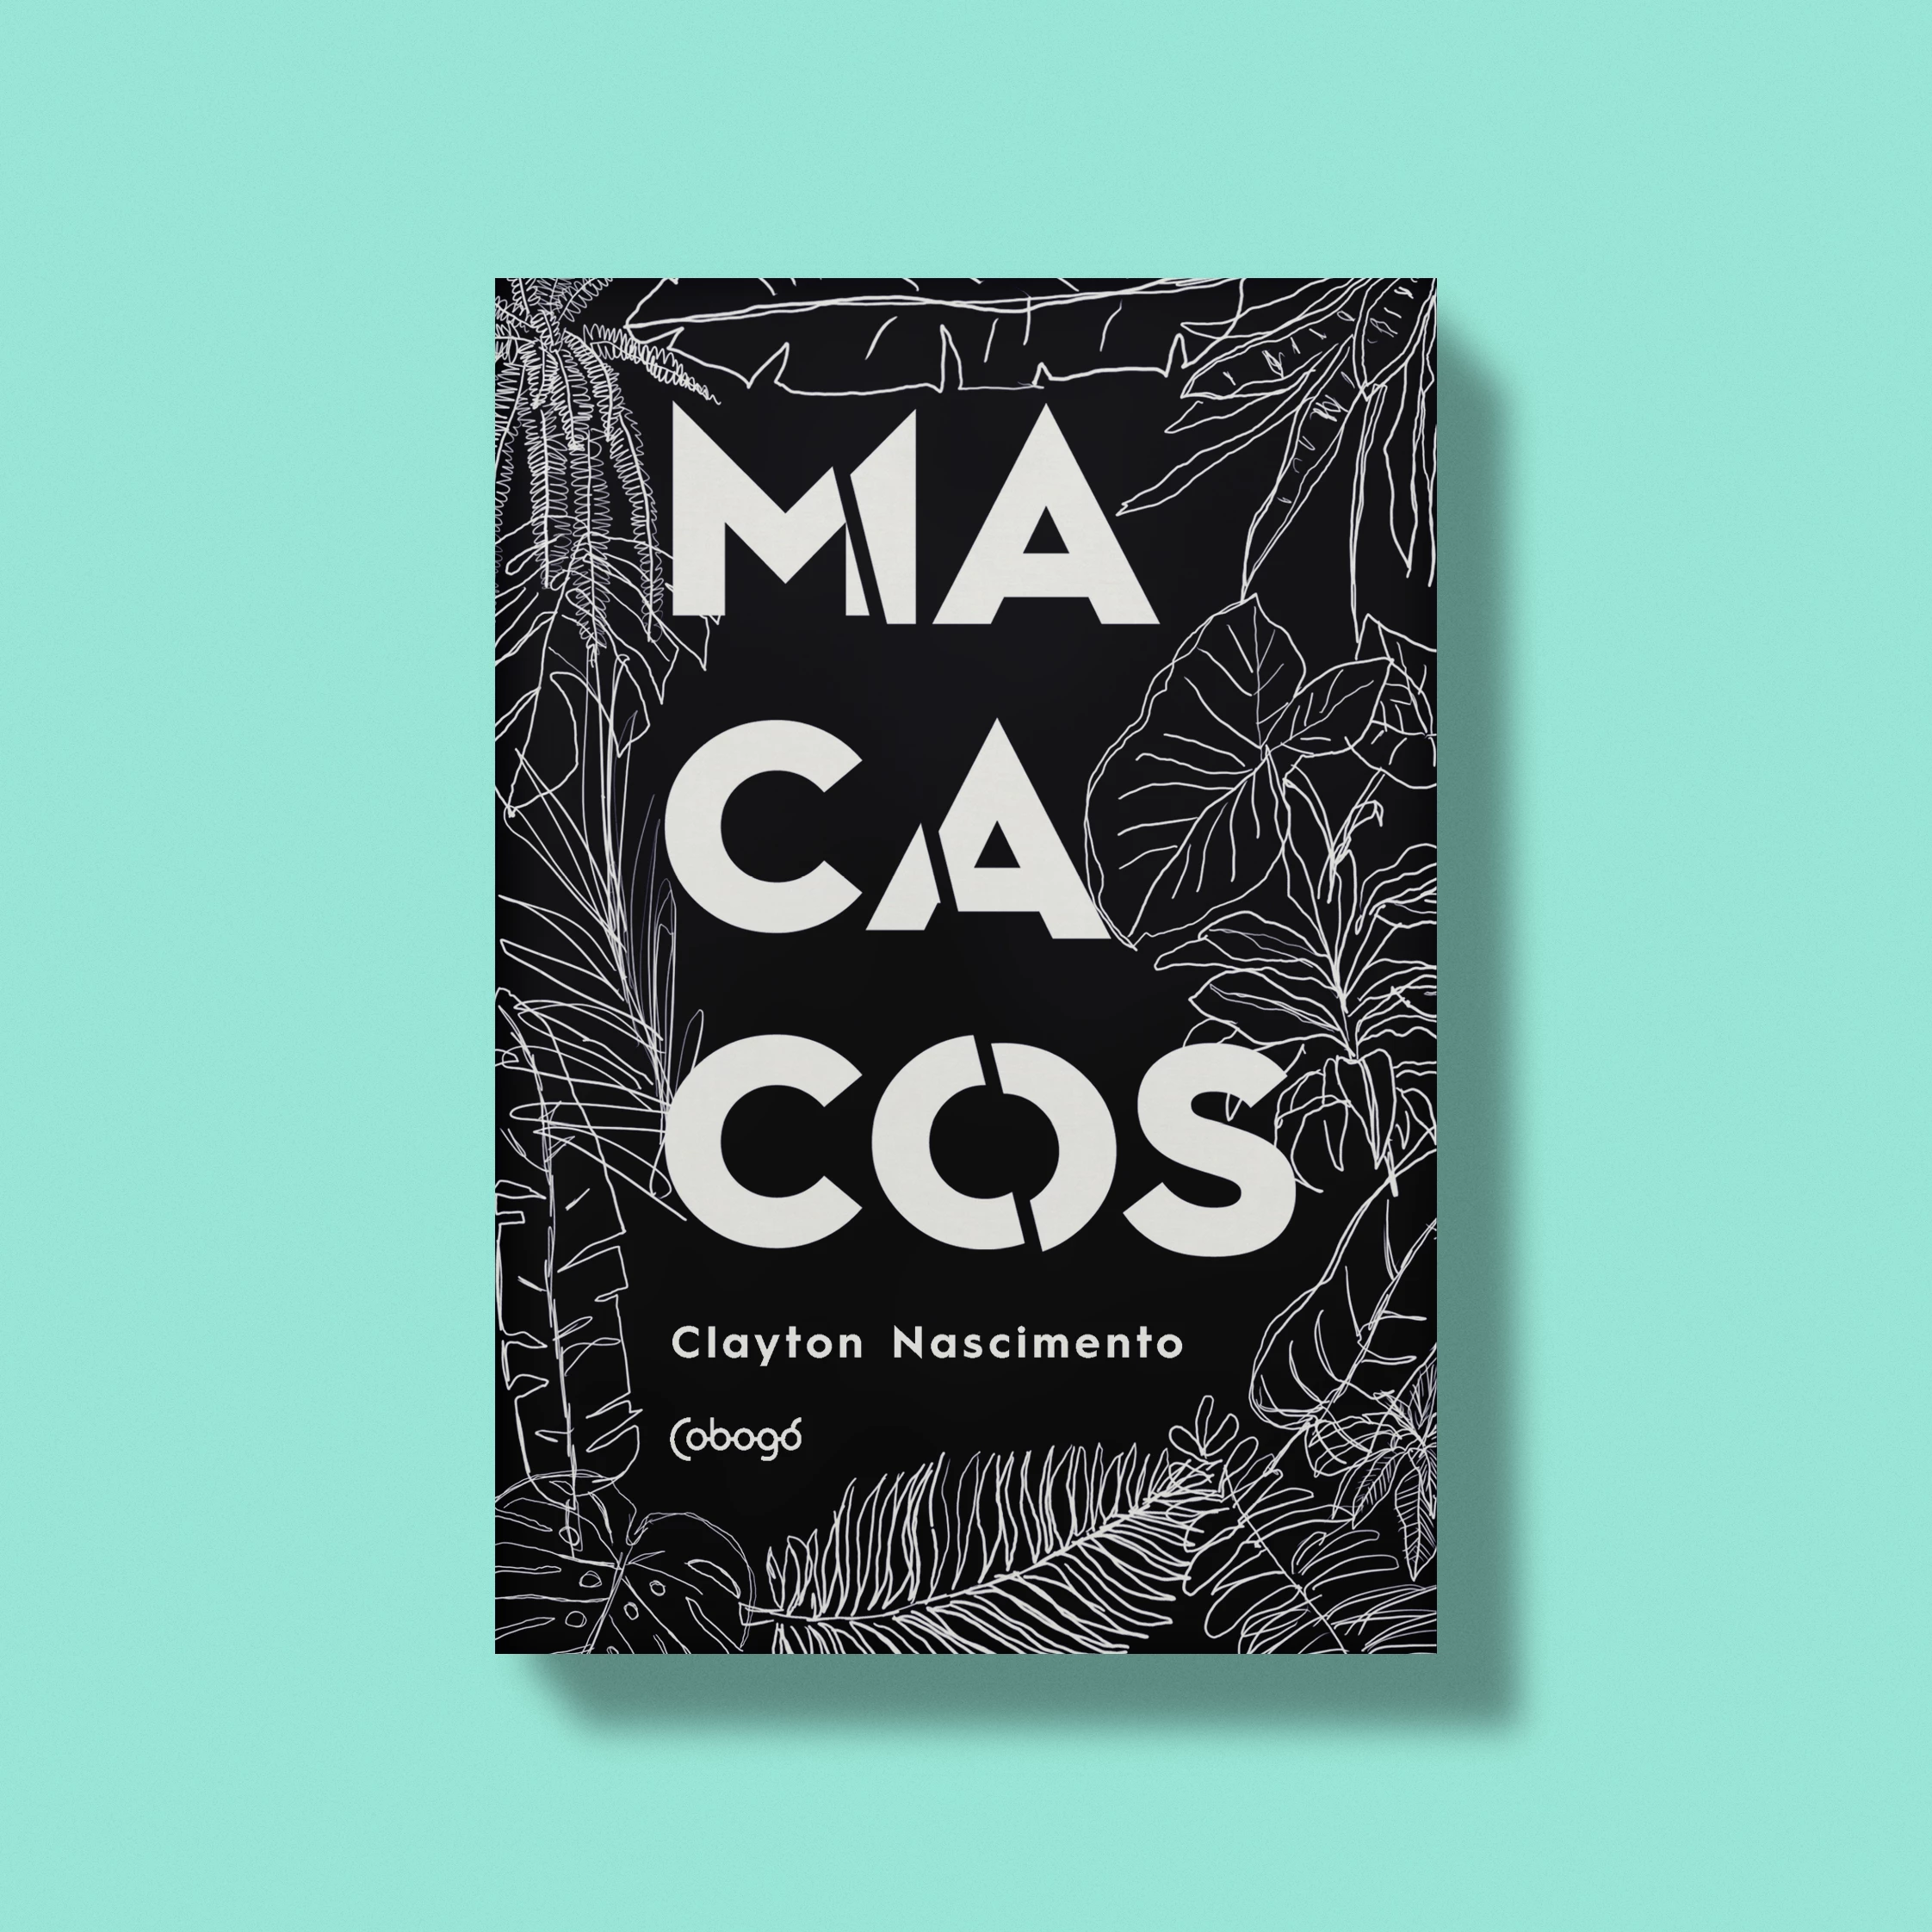 Macacos book by Clayton Nascimento. Photo: Editora Cobogó